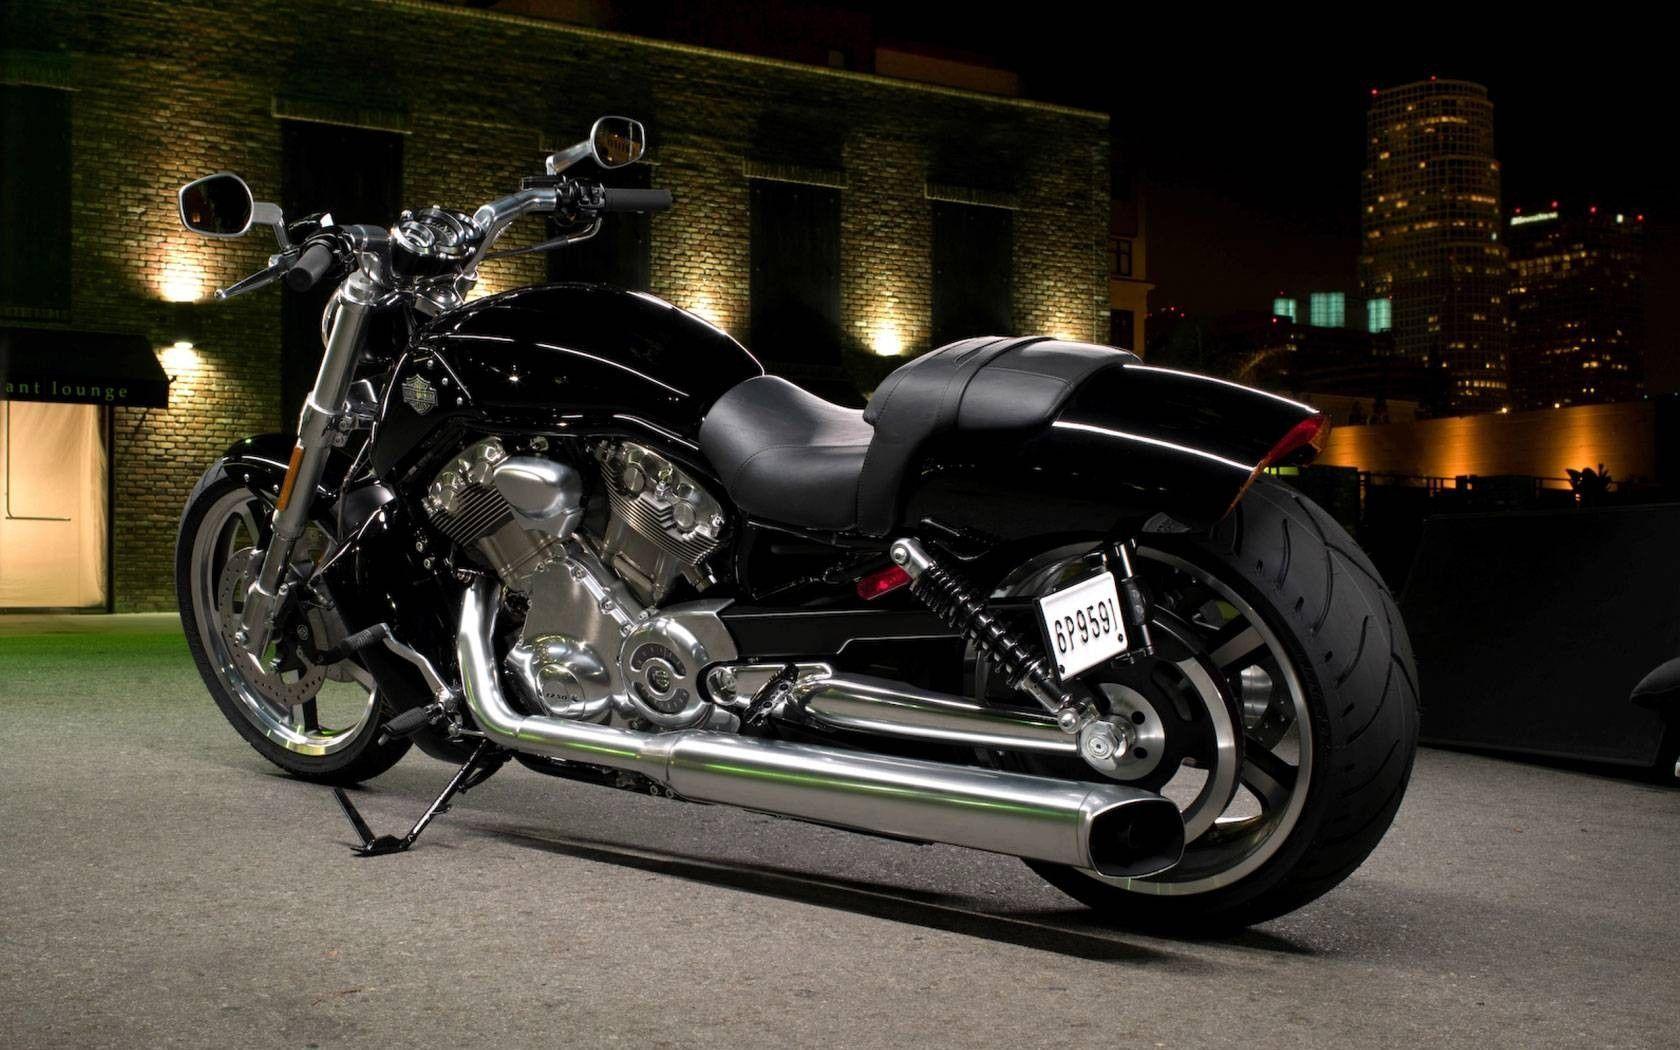 Harley Davidson Motorcycle Wallpaper Bike 6398 Full HD Wallpaper